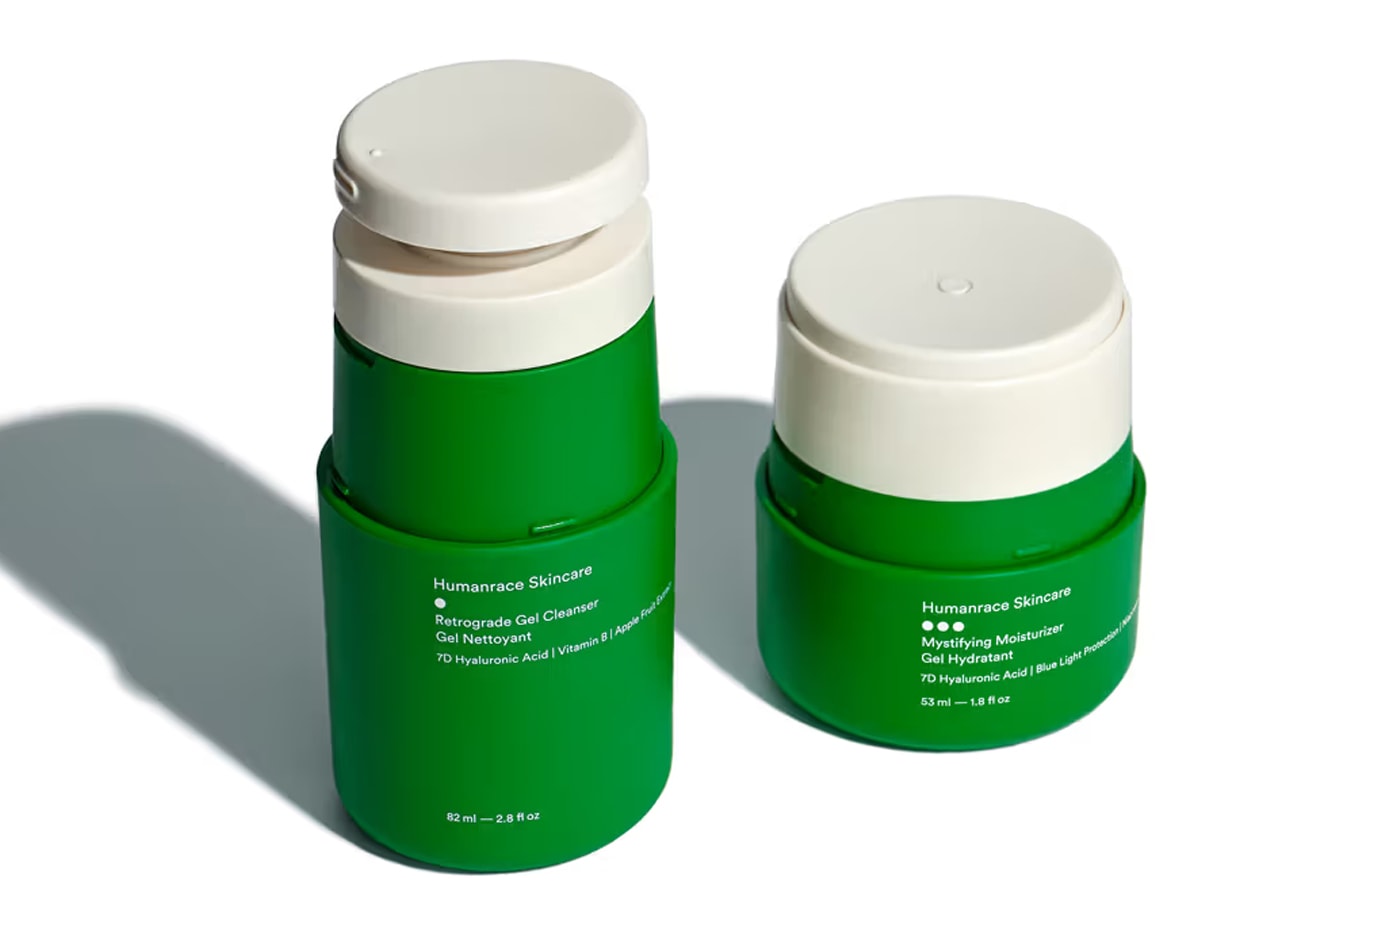 Humanrace pharrell williams 7d gel facial set product duo price details date launch gel moisturizer cleanser routine regimen skincare dermatologist